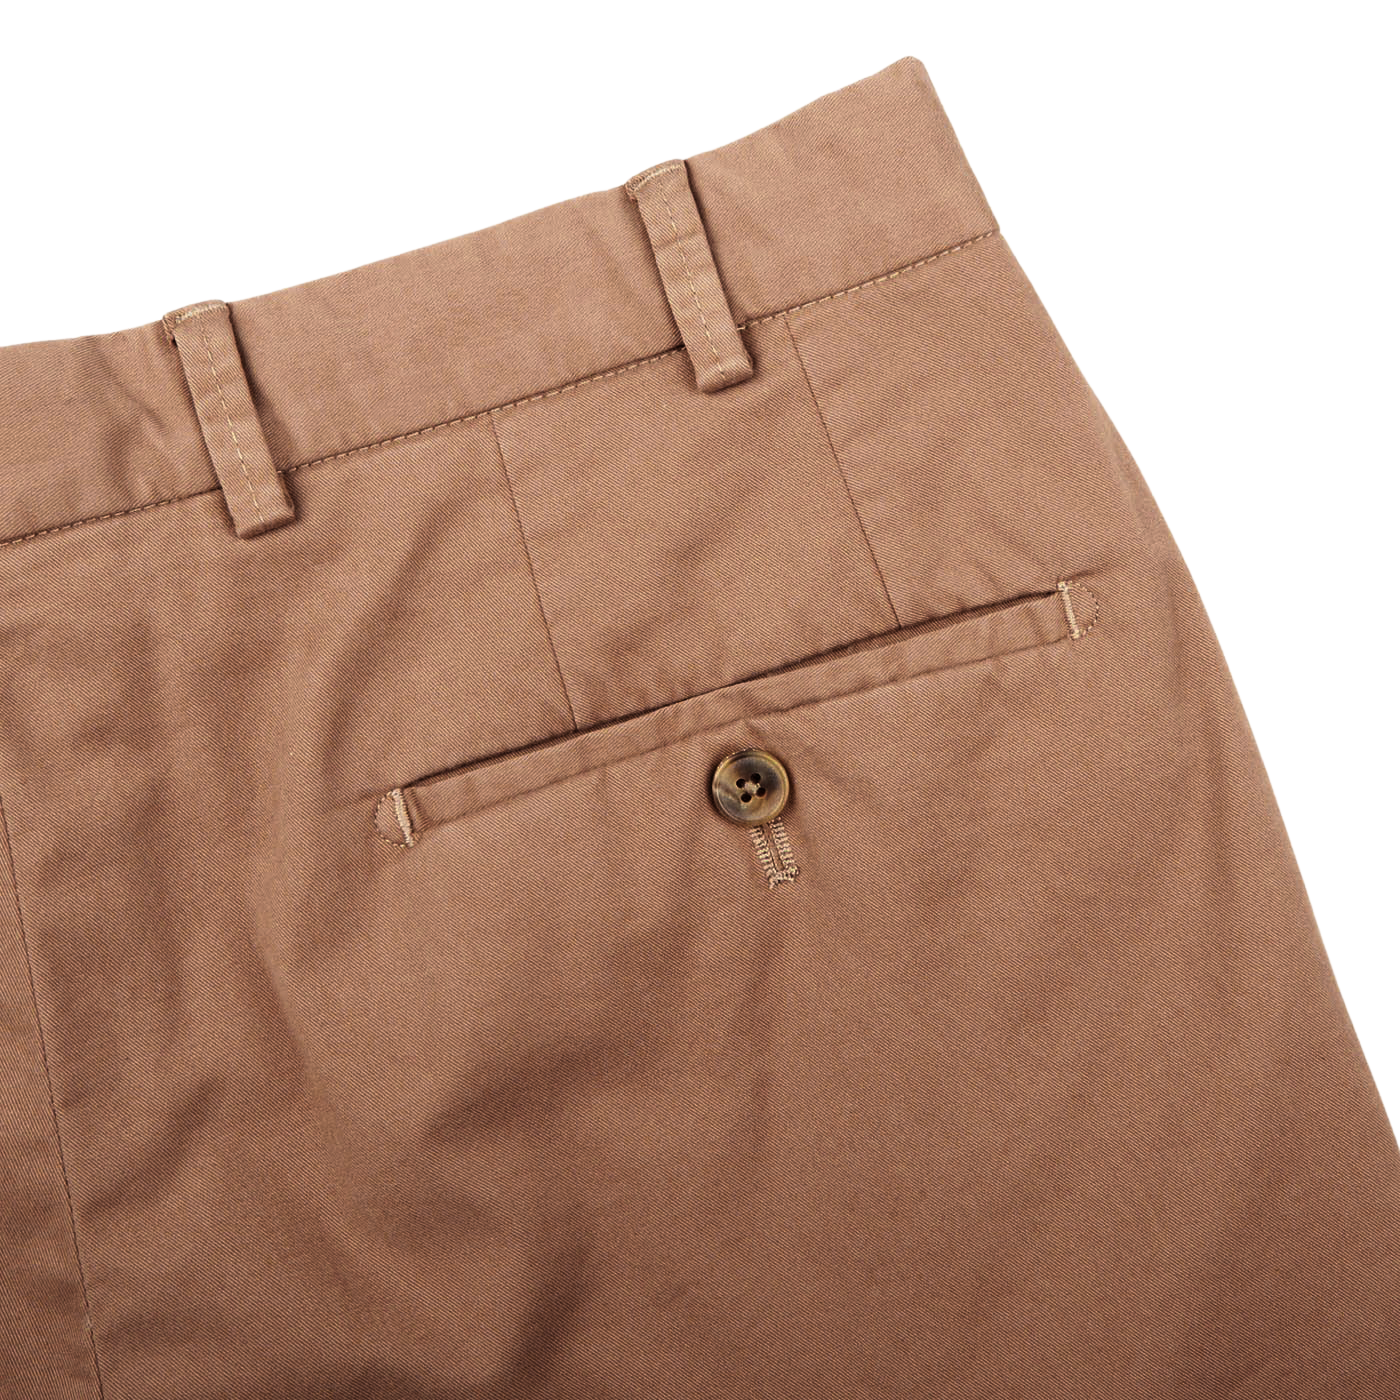 Hiltl Dark Khaki Cotton Stretch Regular Fit Chinos Pocket